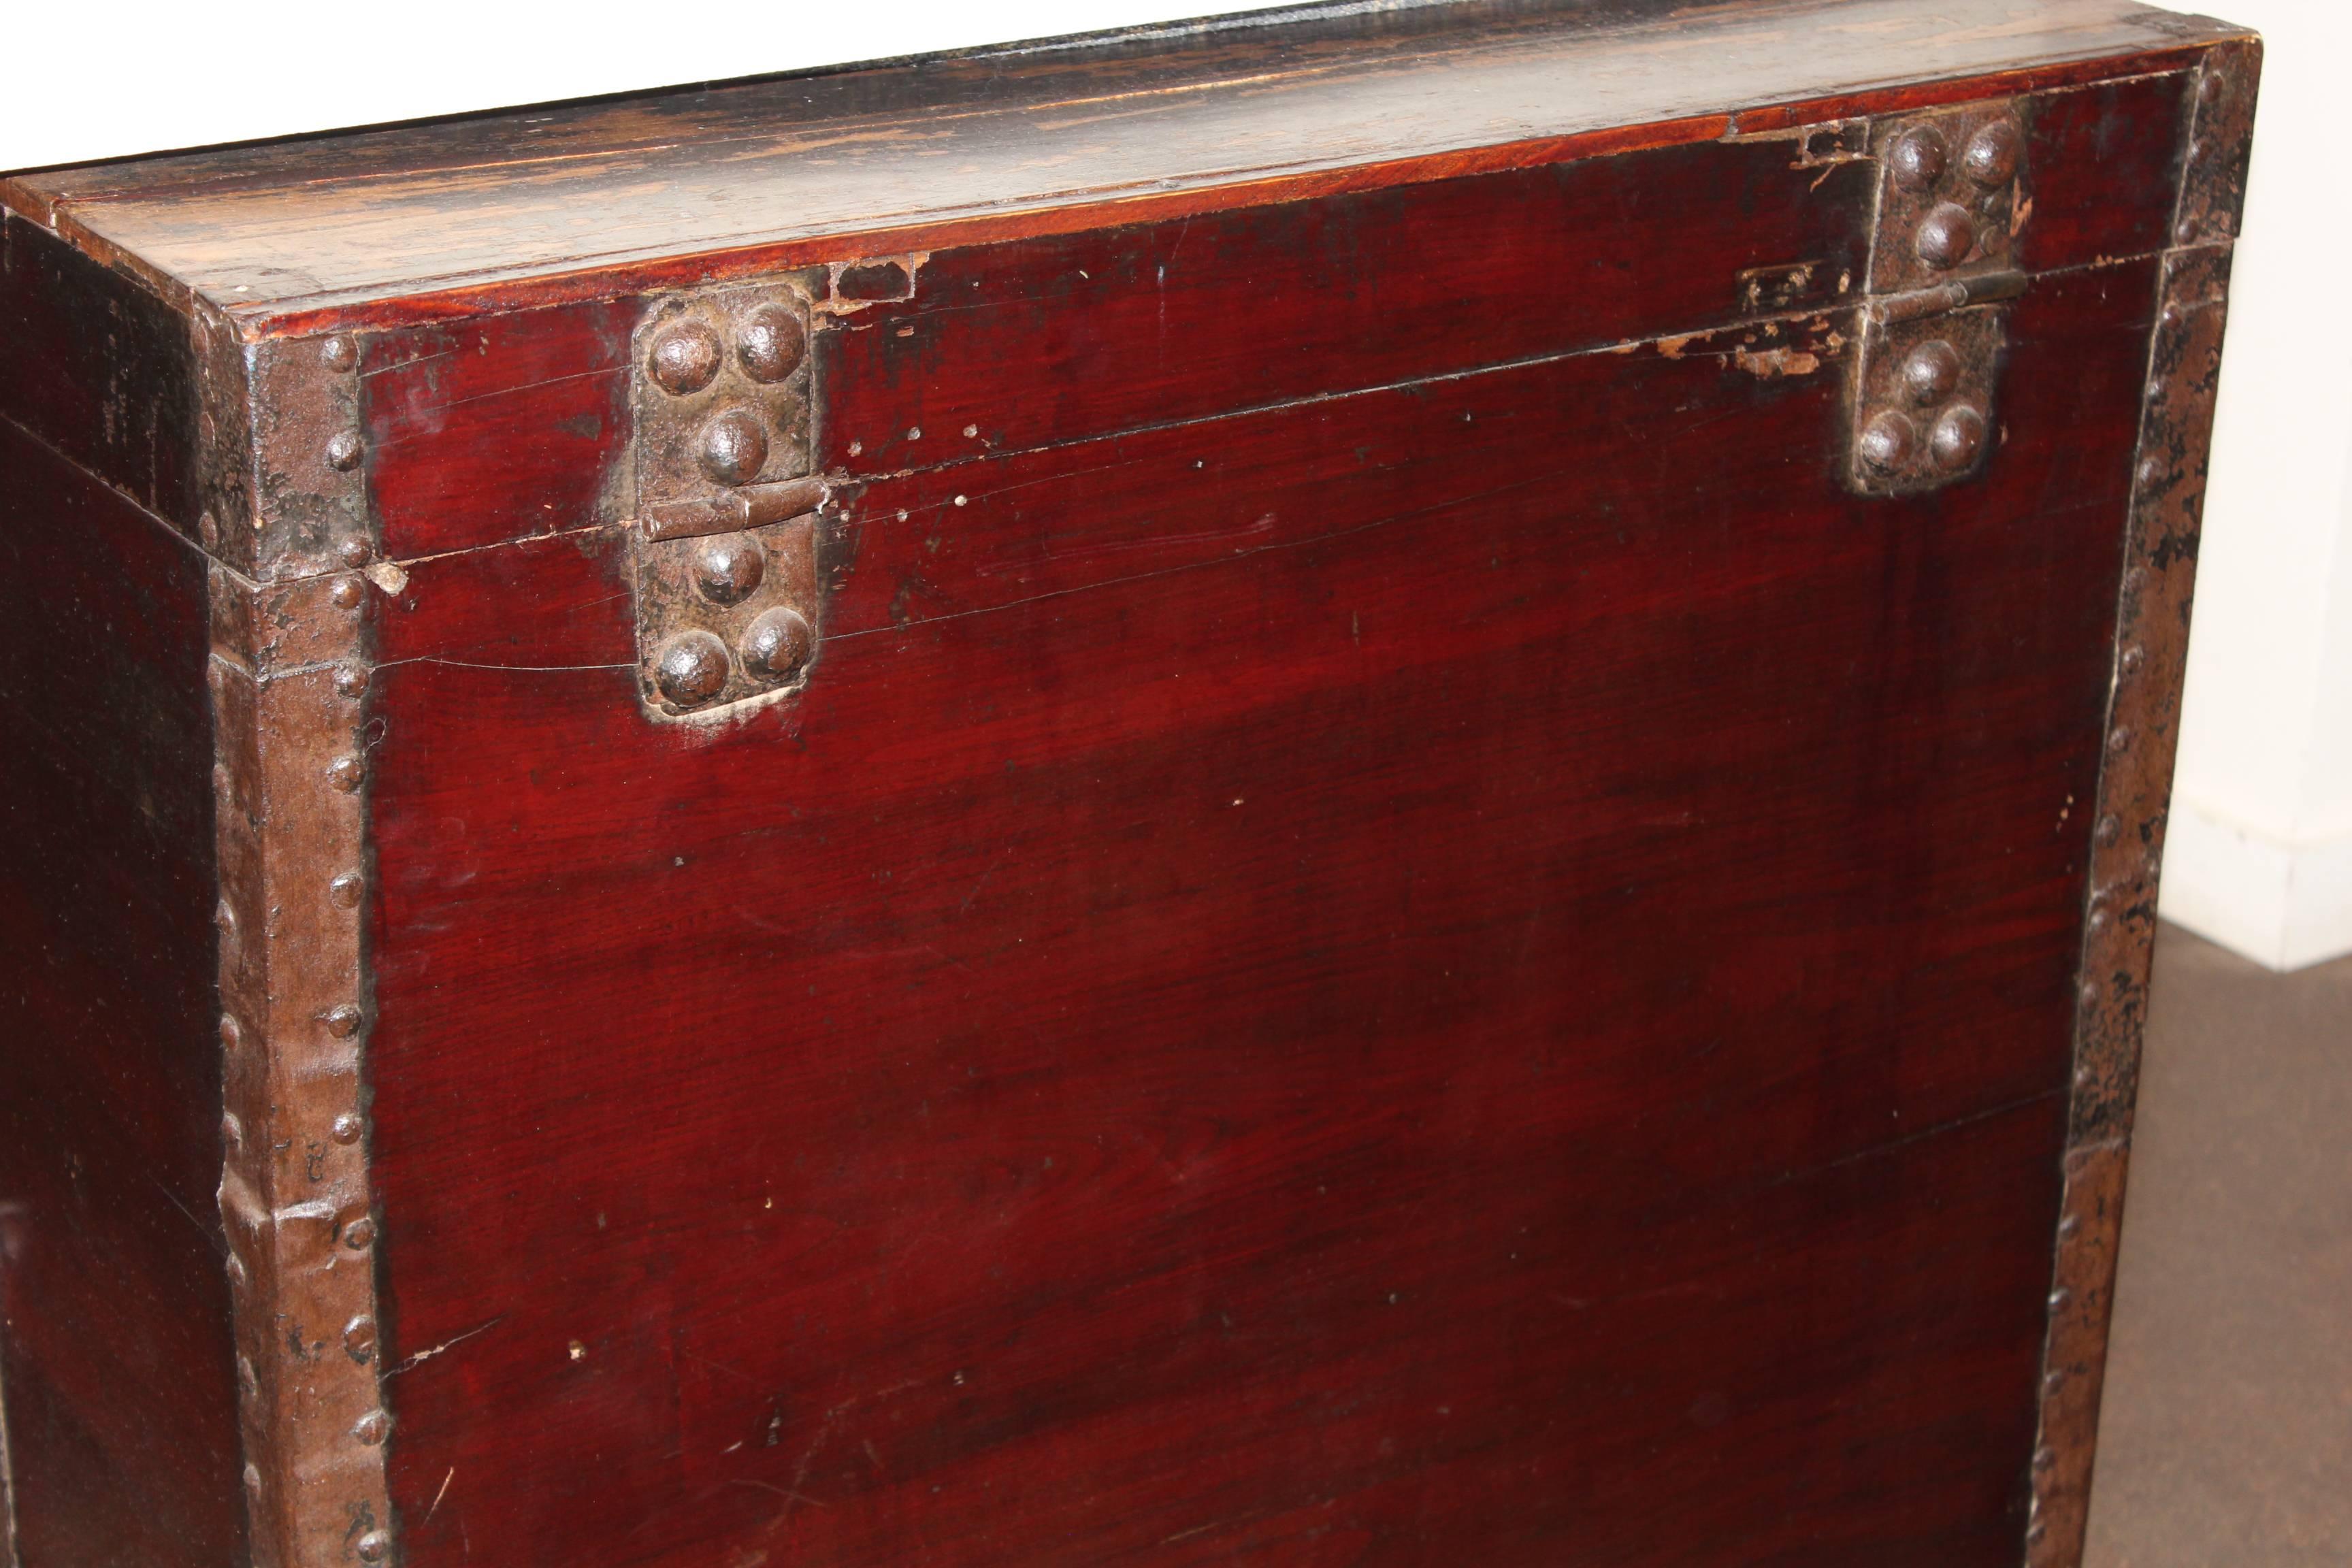 Antique elm travel trunk with original hardware.